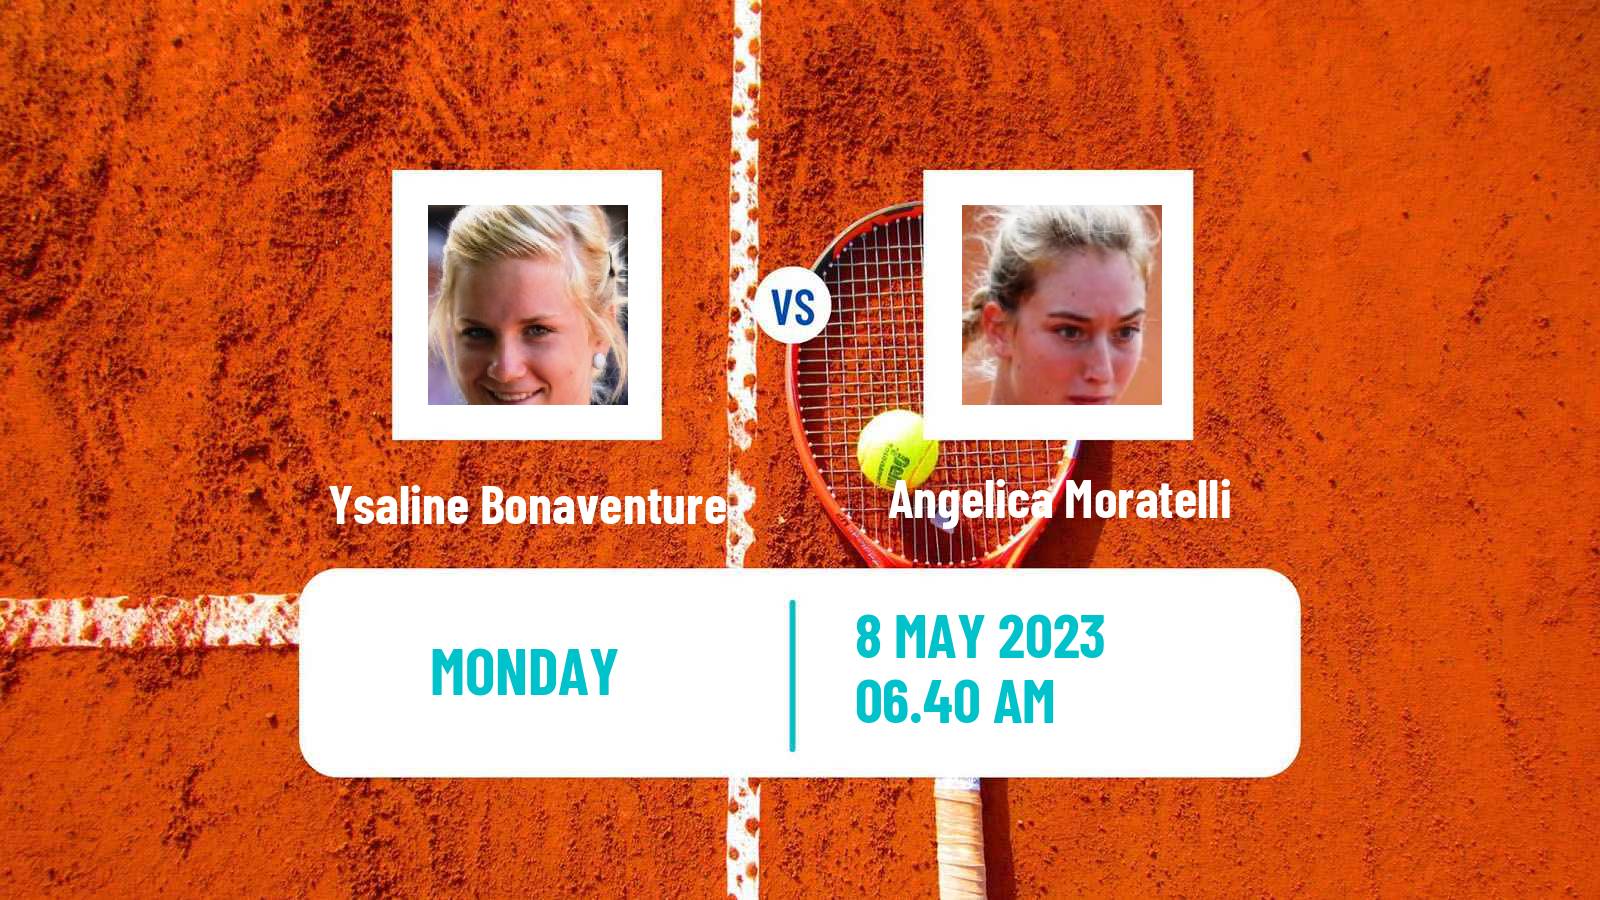 Tennis WTA Roma Ysaline Bonaventure - Angelica Moratelli